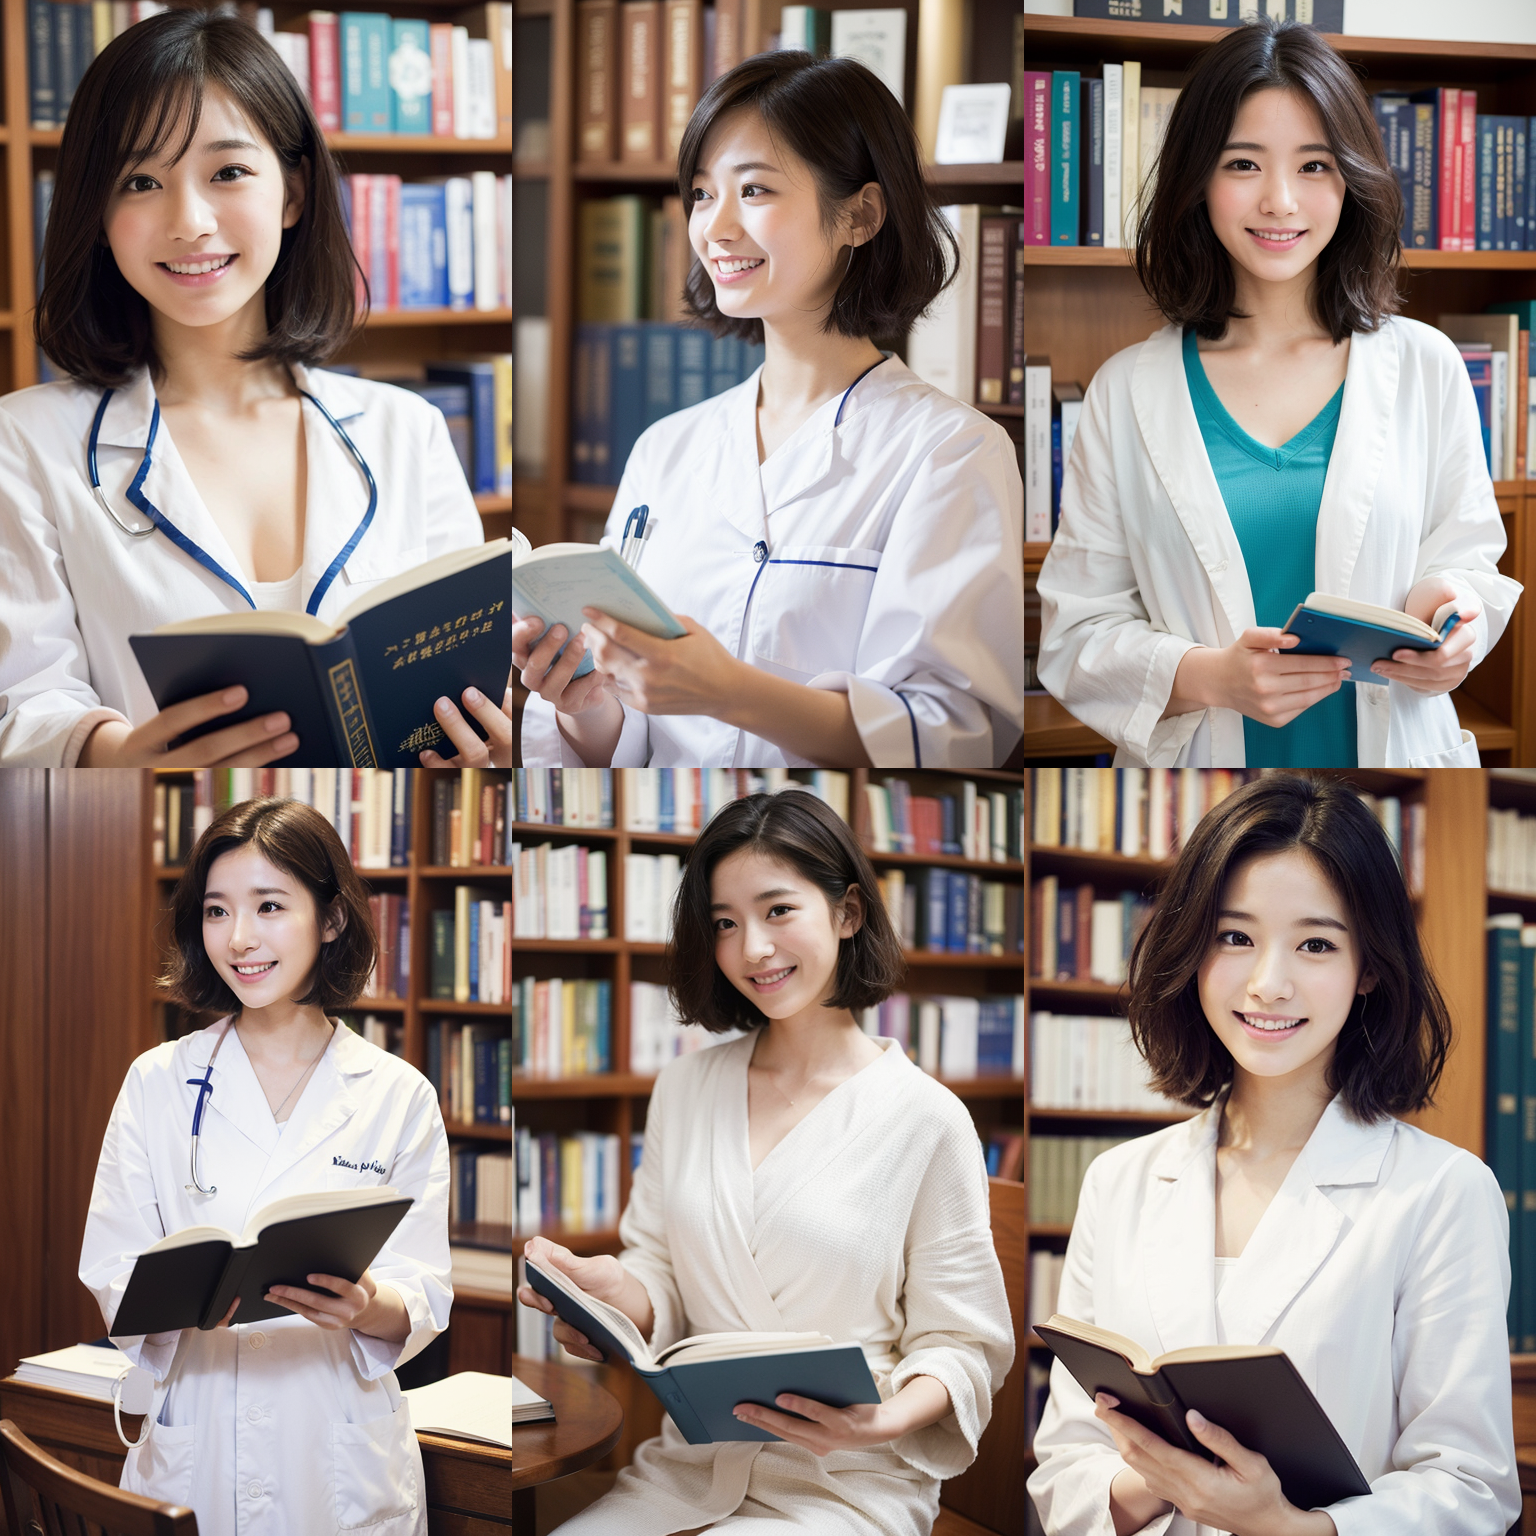 【AI繪圖】年輕女孩醫生穿醫師服在東京大學圖書館